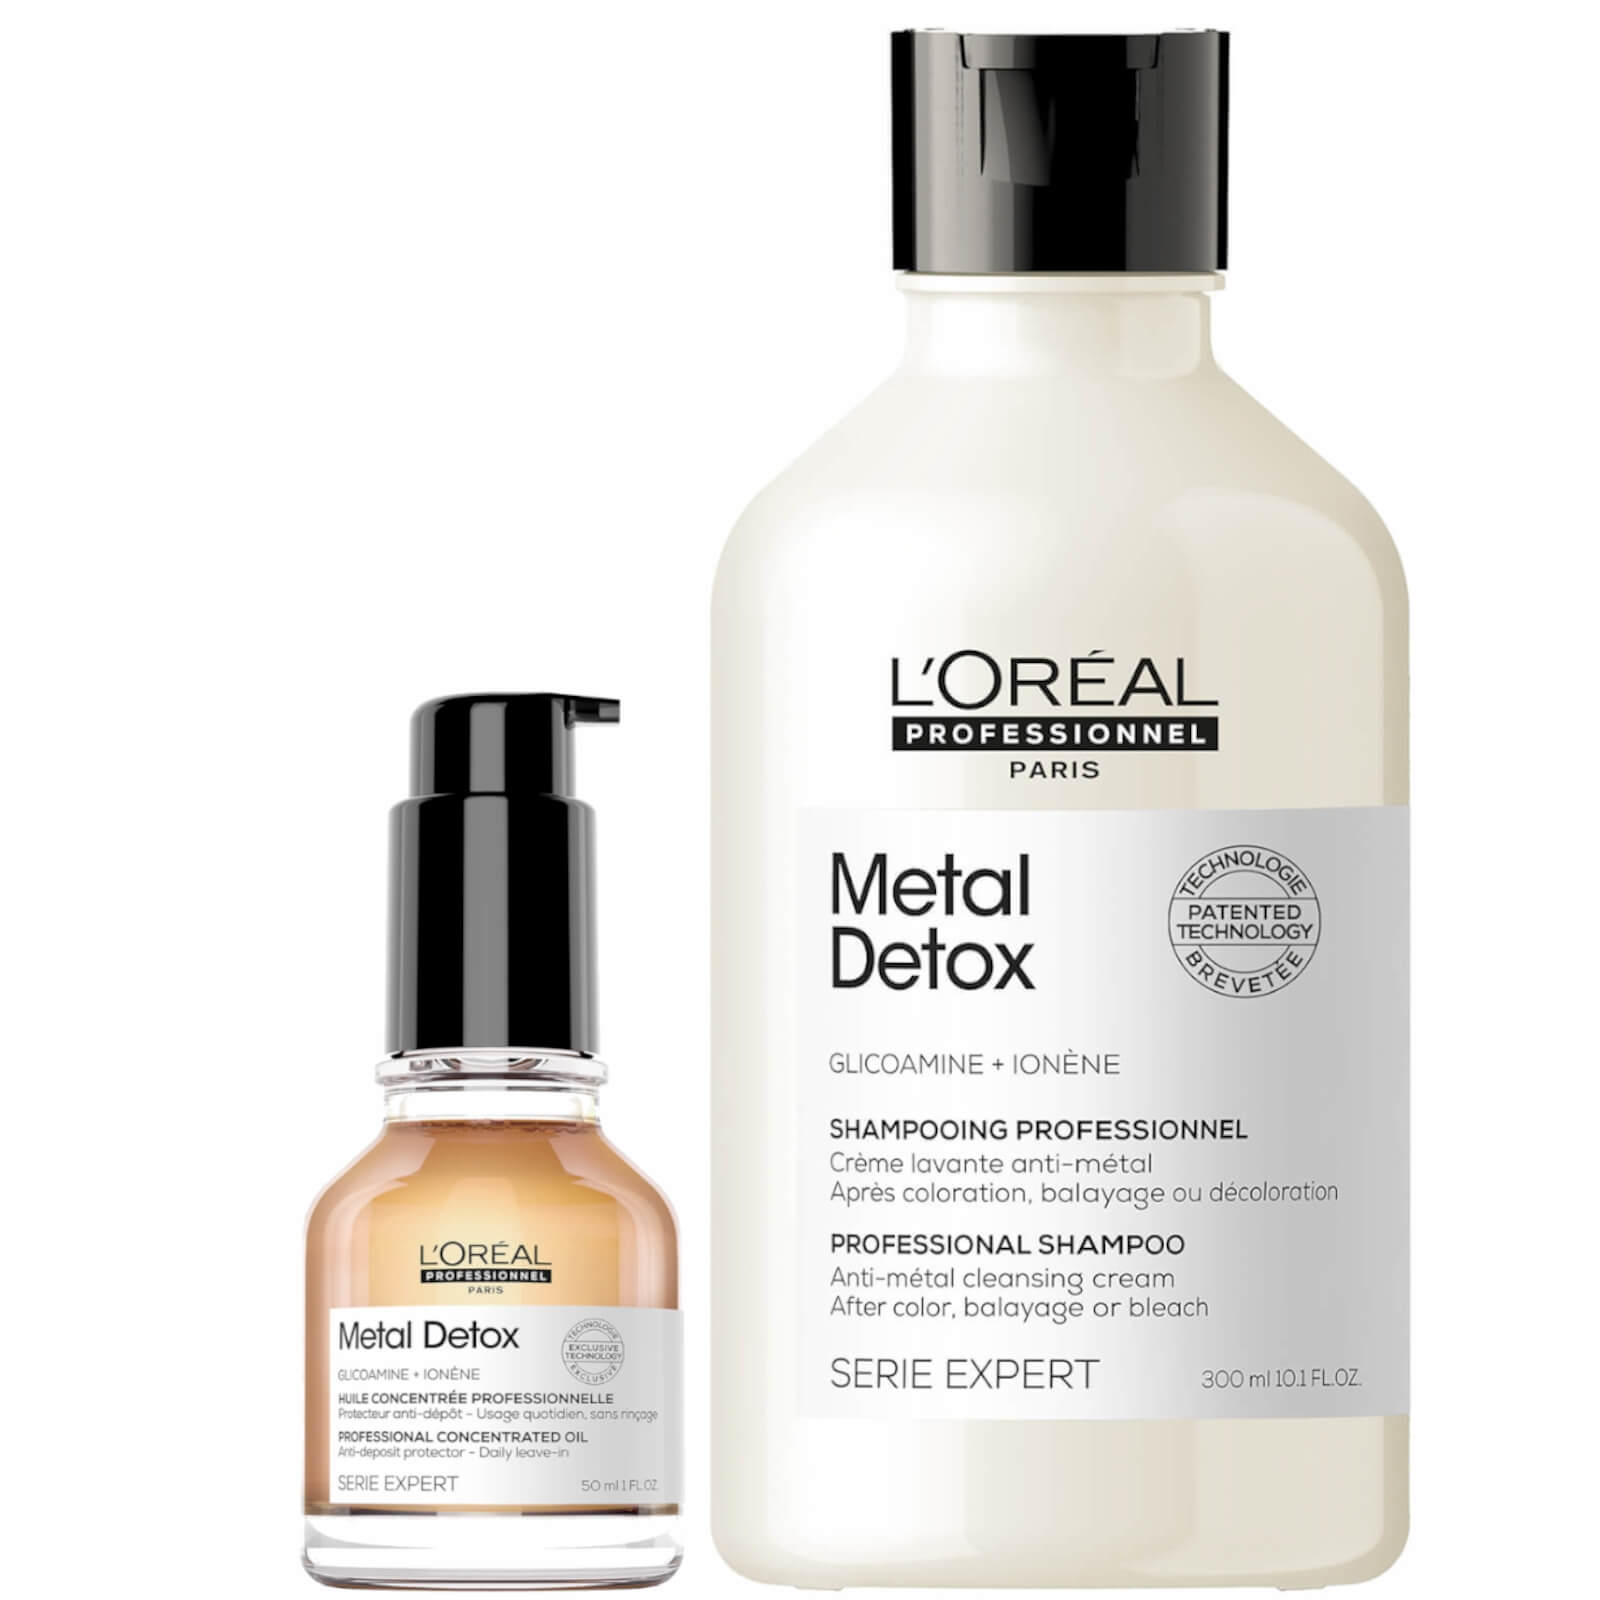 L'Oreal Professionnel Metal Detox Oil and Shampoo Bundle